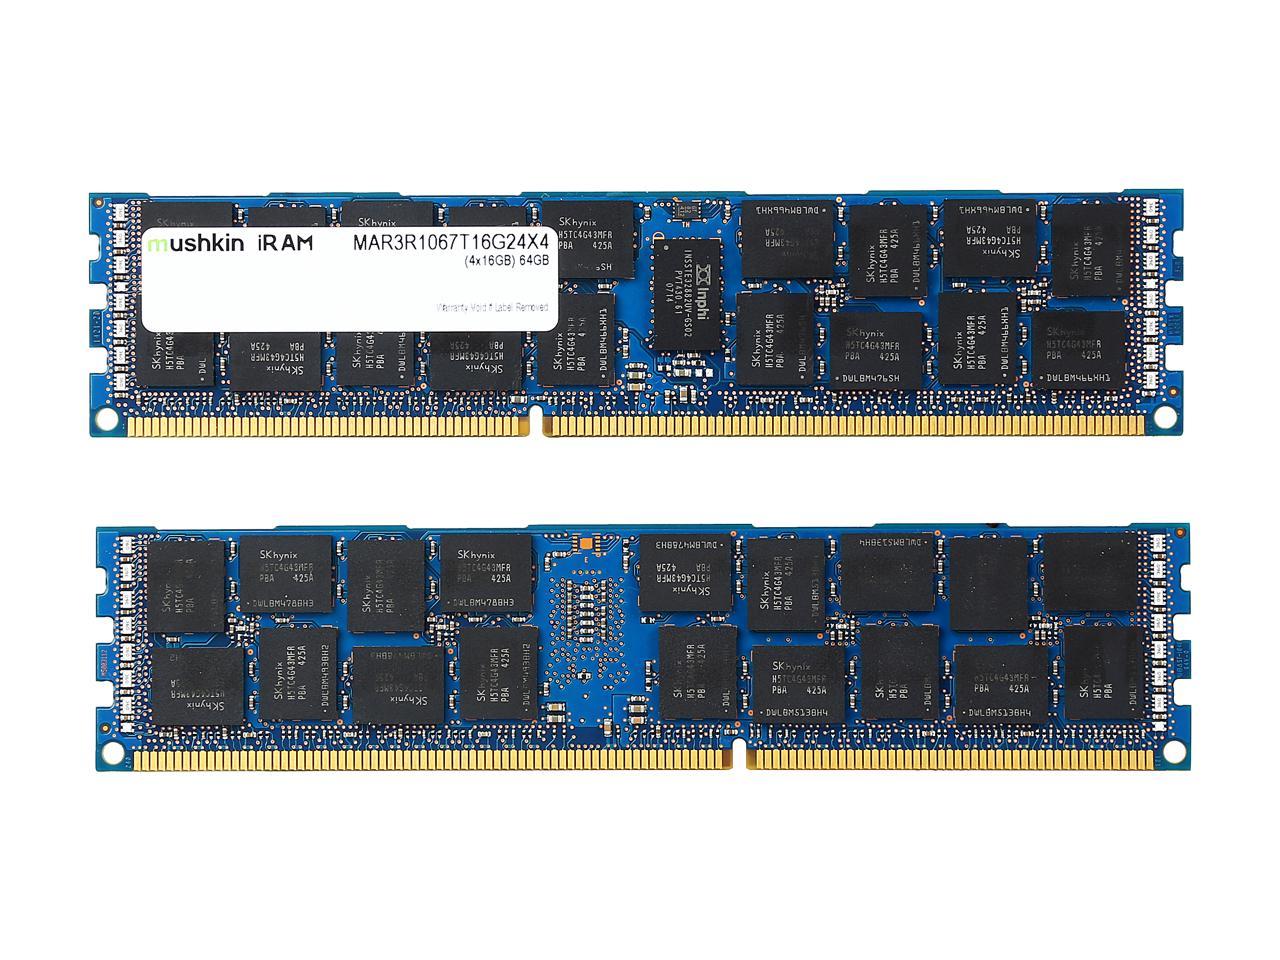 Mushkin iRam 64GB (4 x 16GB) DDR3 1066 (PC3 8500) ECC Registered Memory for Apple Model MAR3R1067T16G24X4